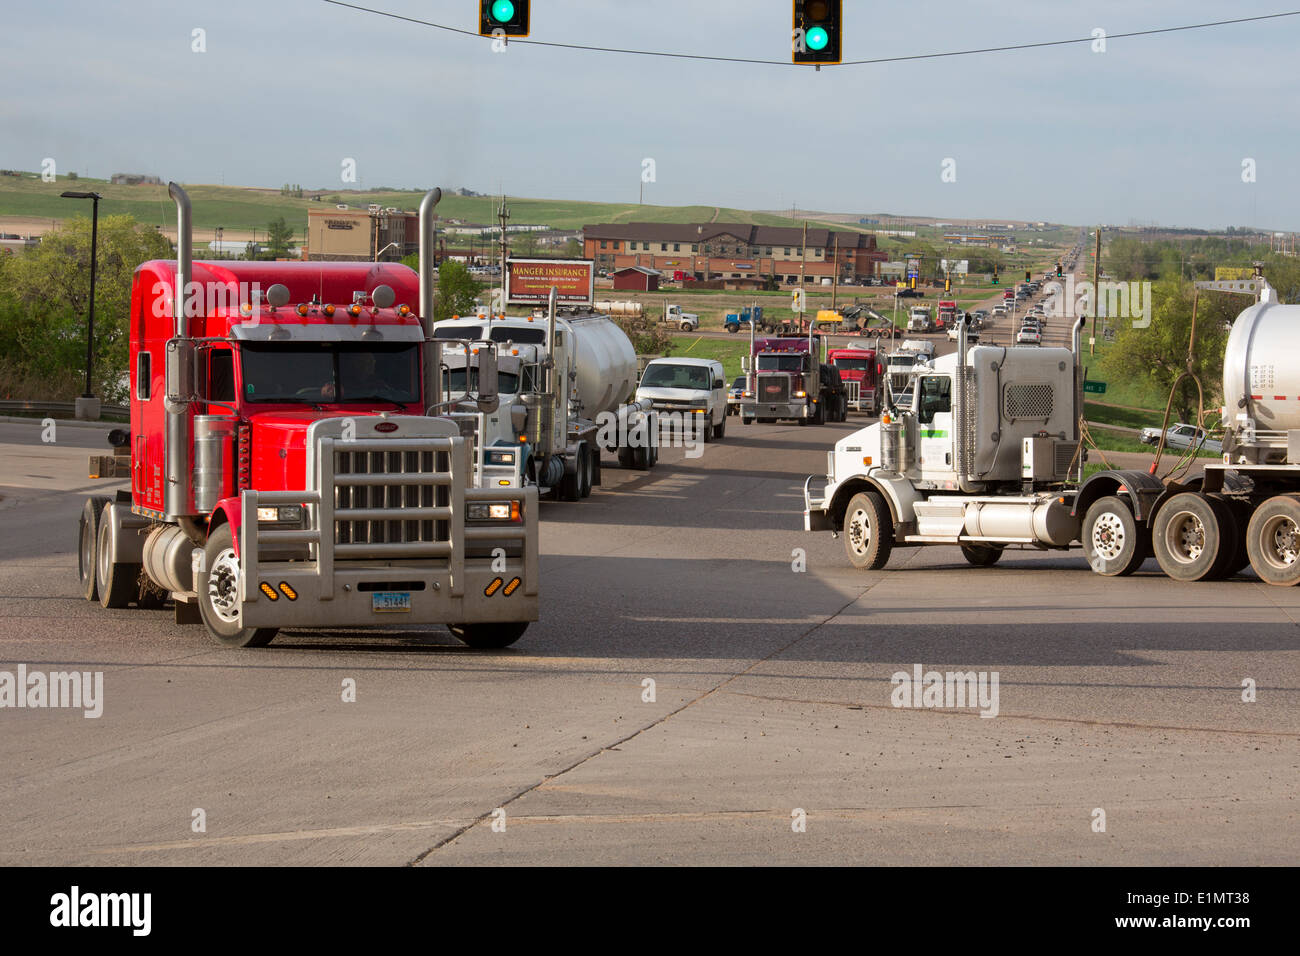 Watford City, North Dakota - Oil service trucks clog the streets of western North Dakota towns. Stock Photo